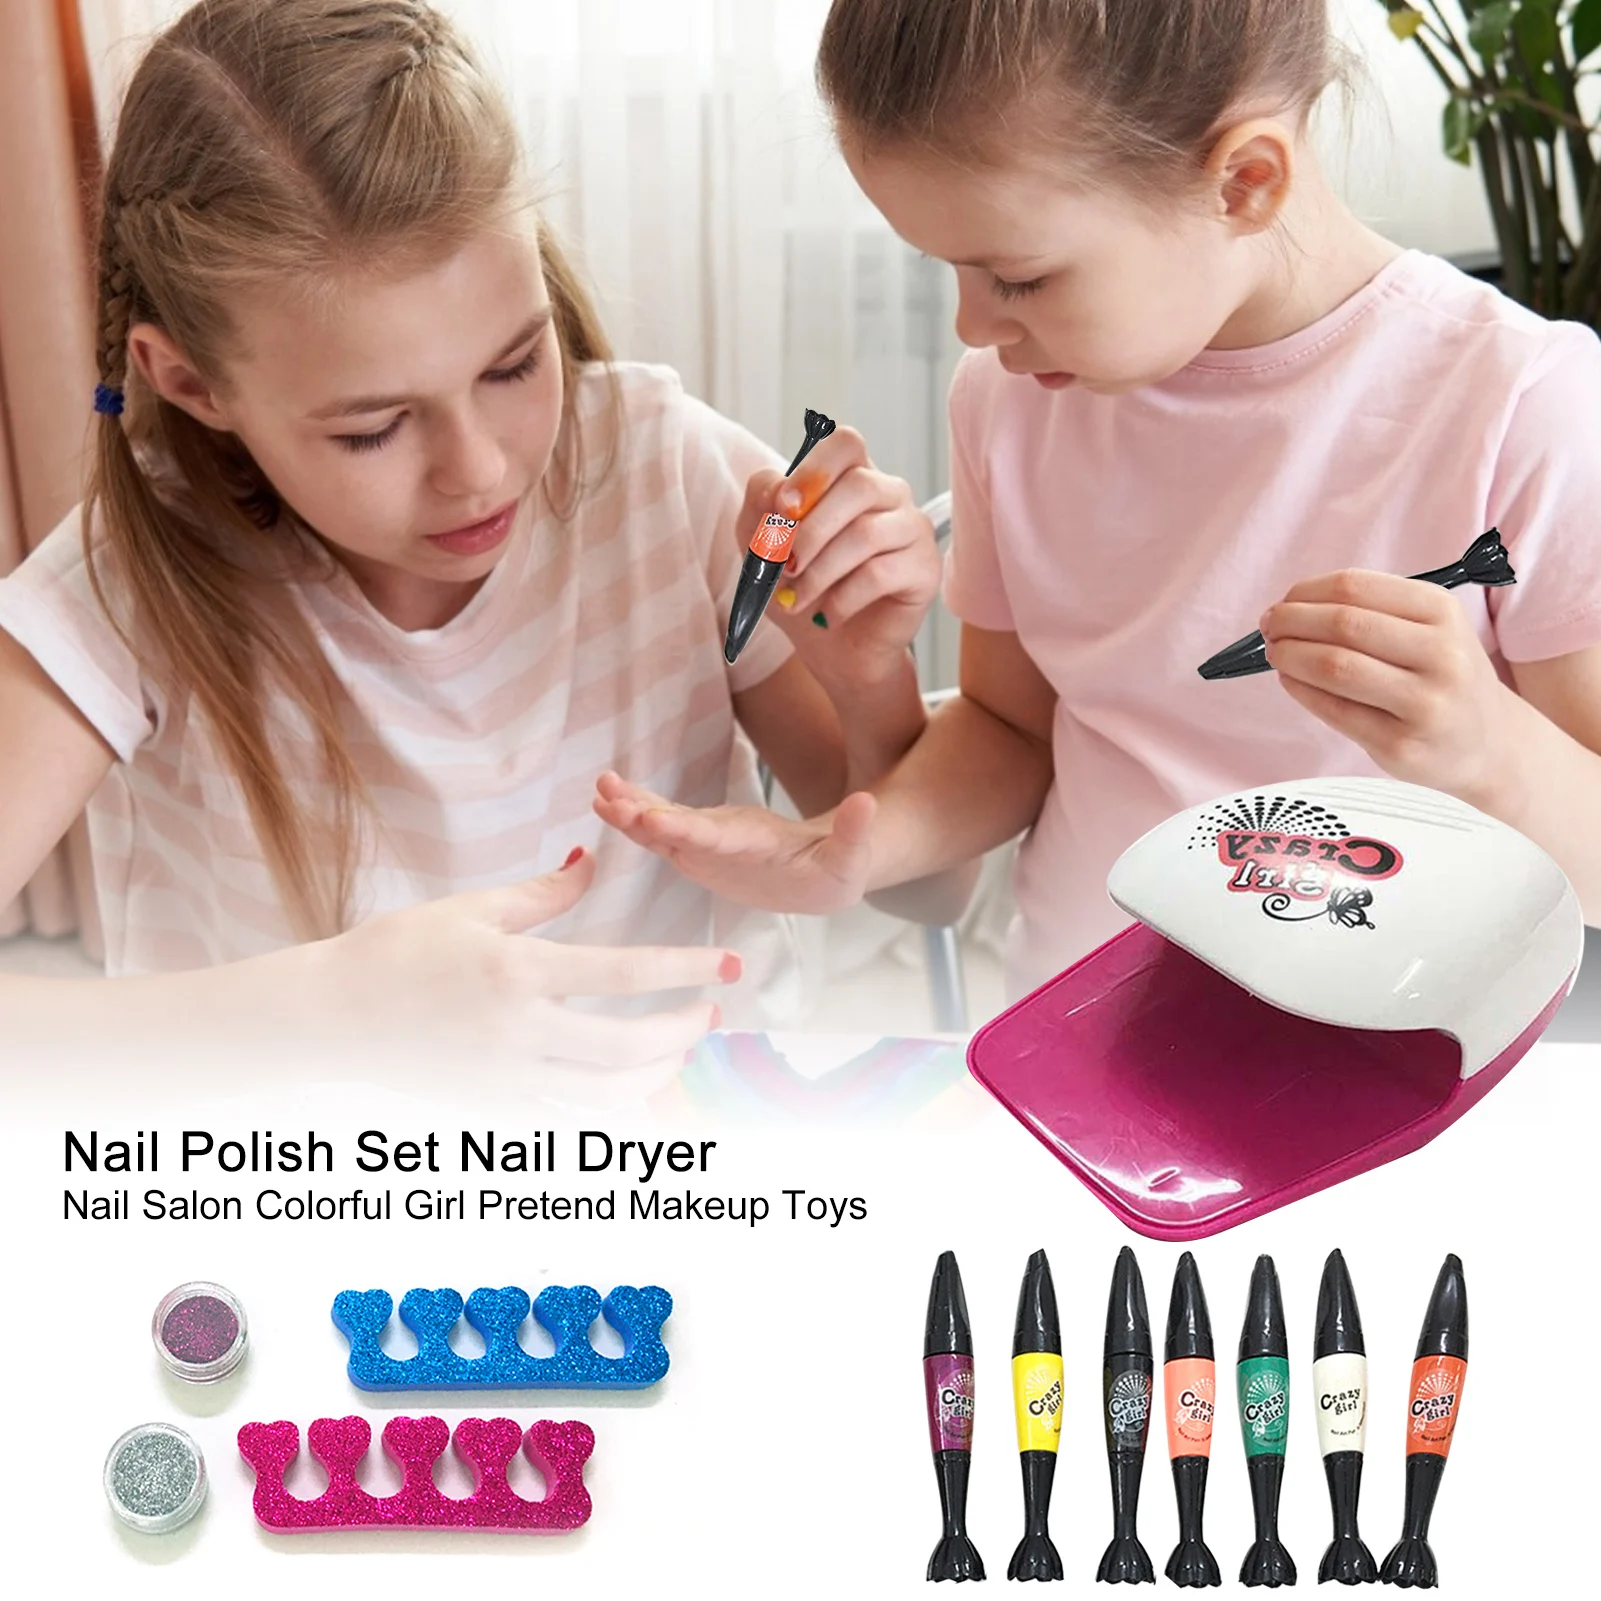 Kids Nail Polish Set Nail Dryer Nail Salon Colorful Girl Pretend Makeup Toys Nail Art Set Dryer Machine Tool Gift For Kids Girls